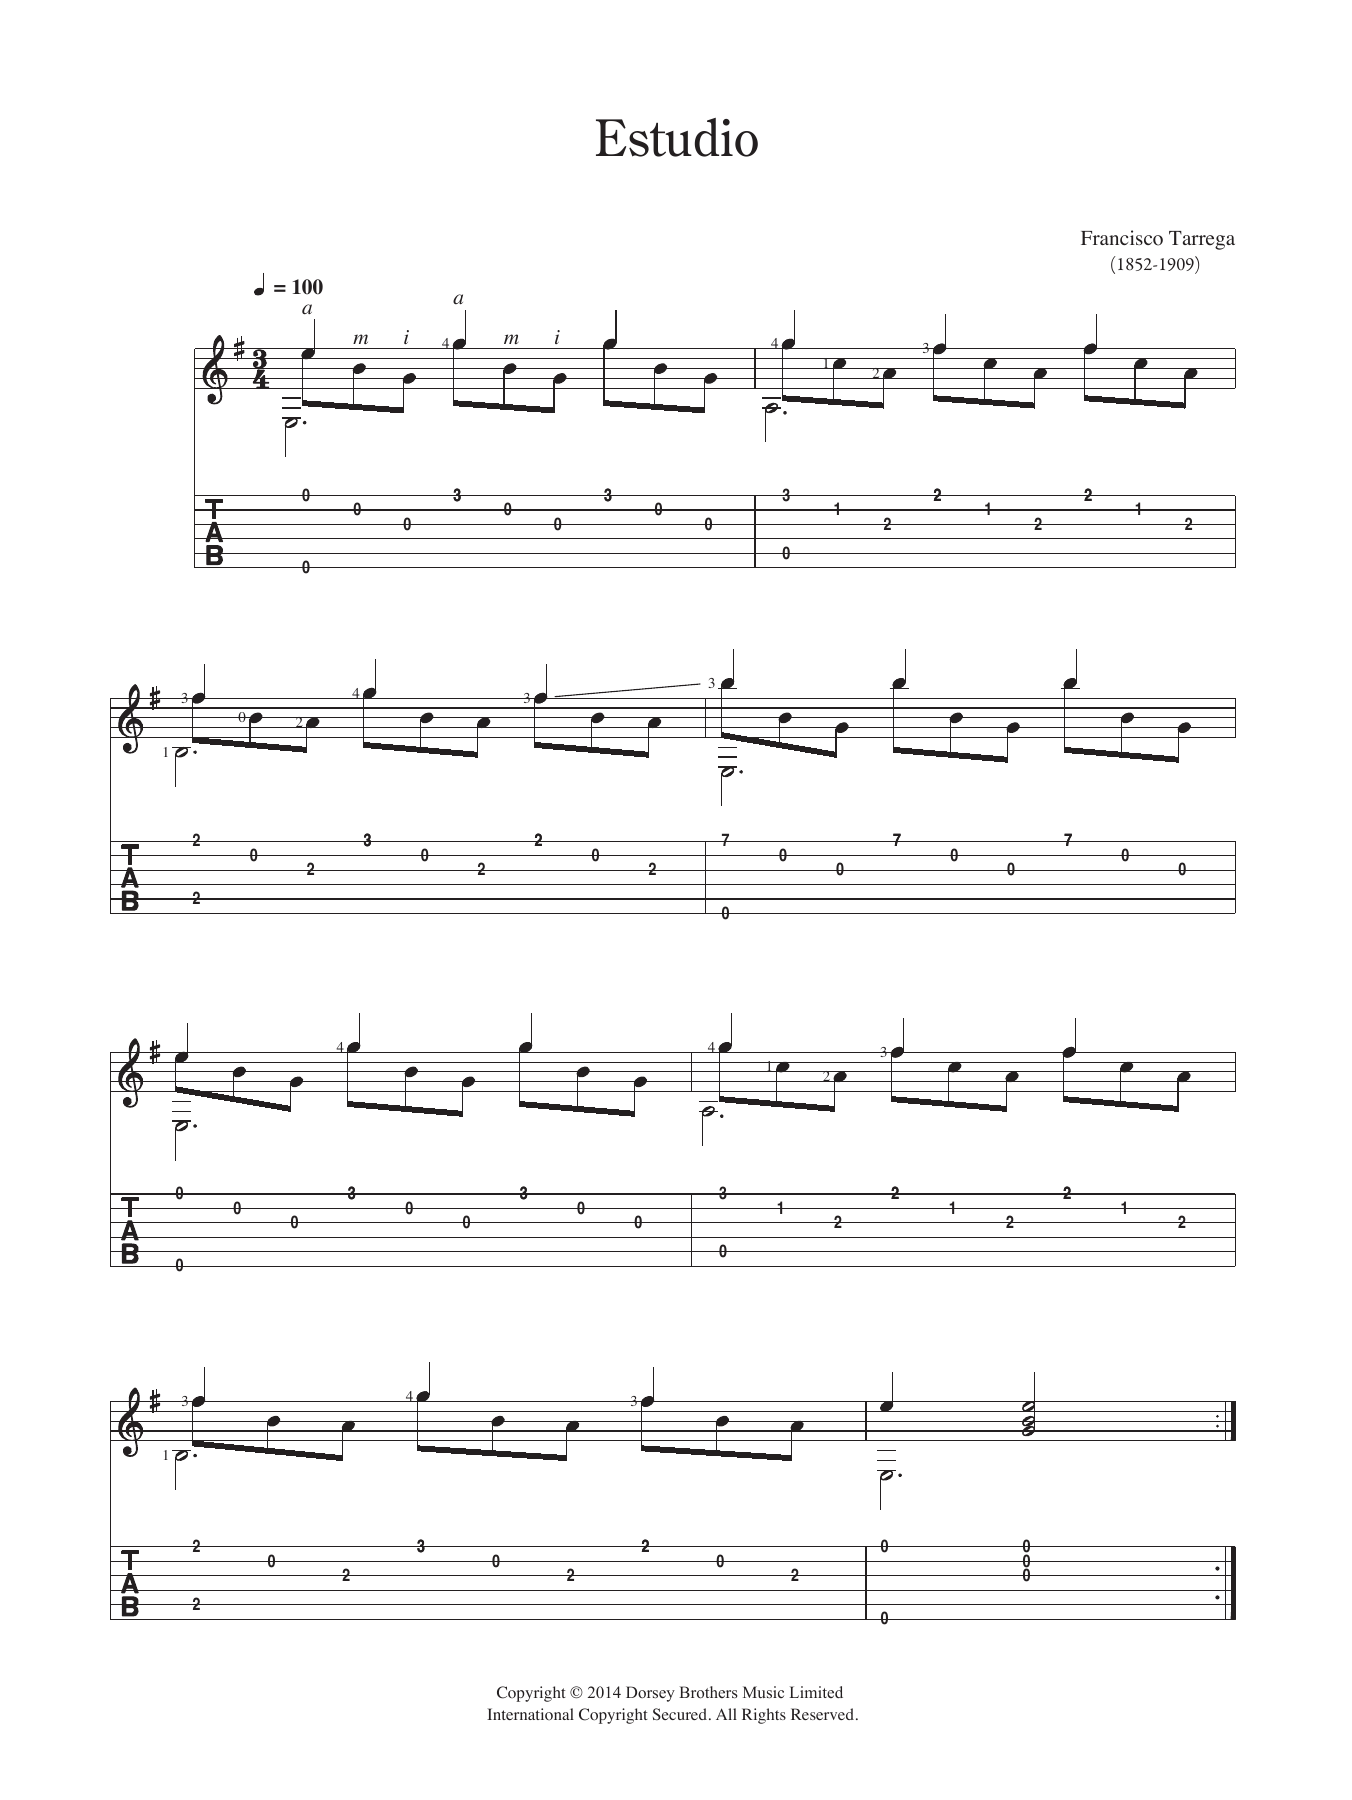 Download Francisco Tarrega Estudio Sheet Music and learn how to play Guitar PDF digital score in minutes